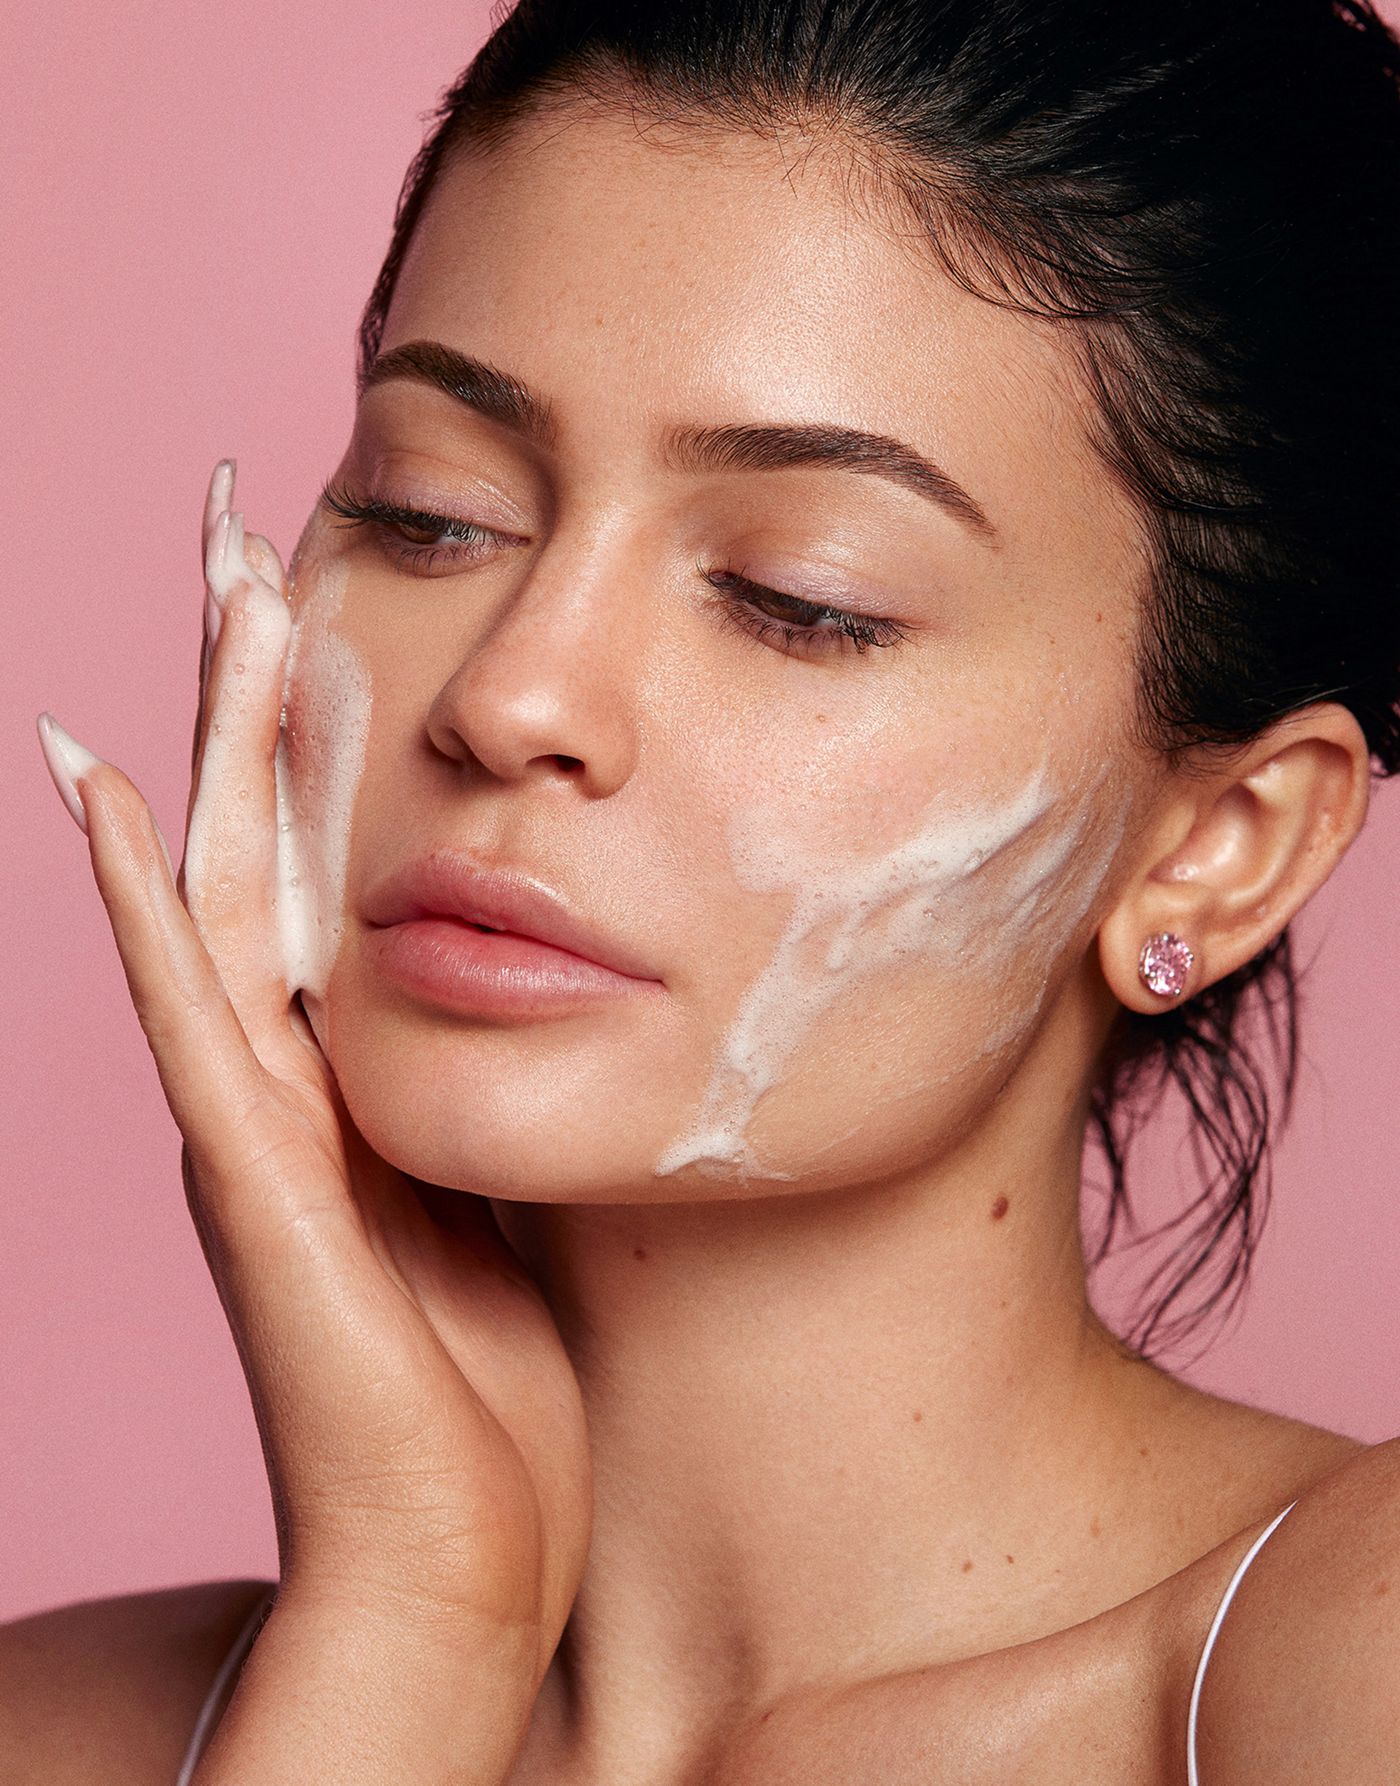 Kylie Skin Foaming Face Wash 149ml